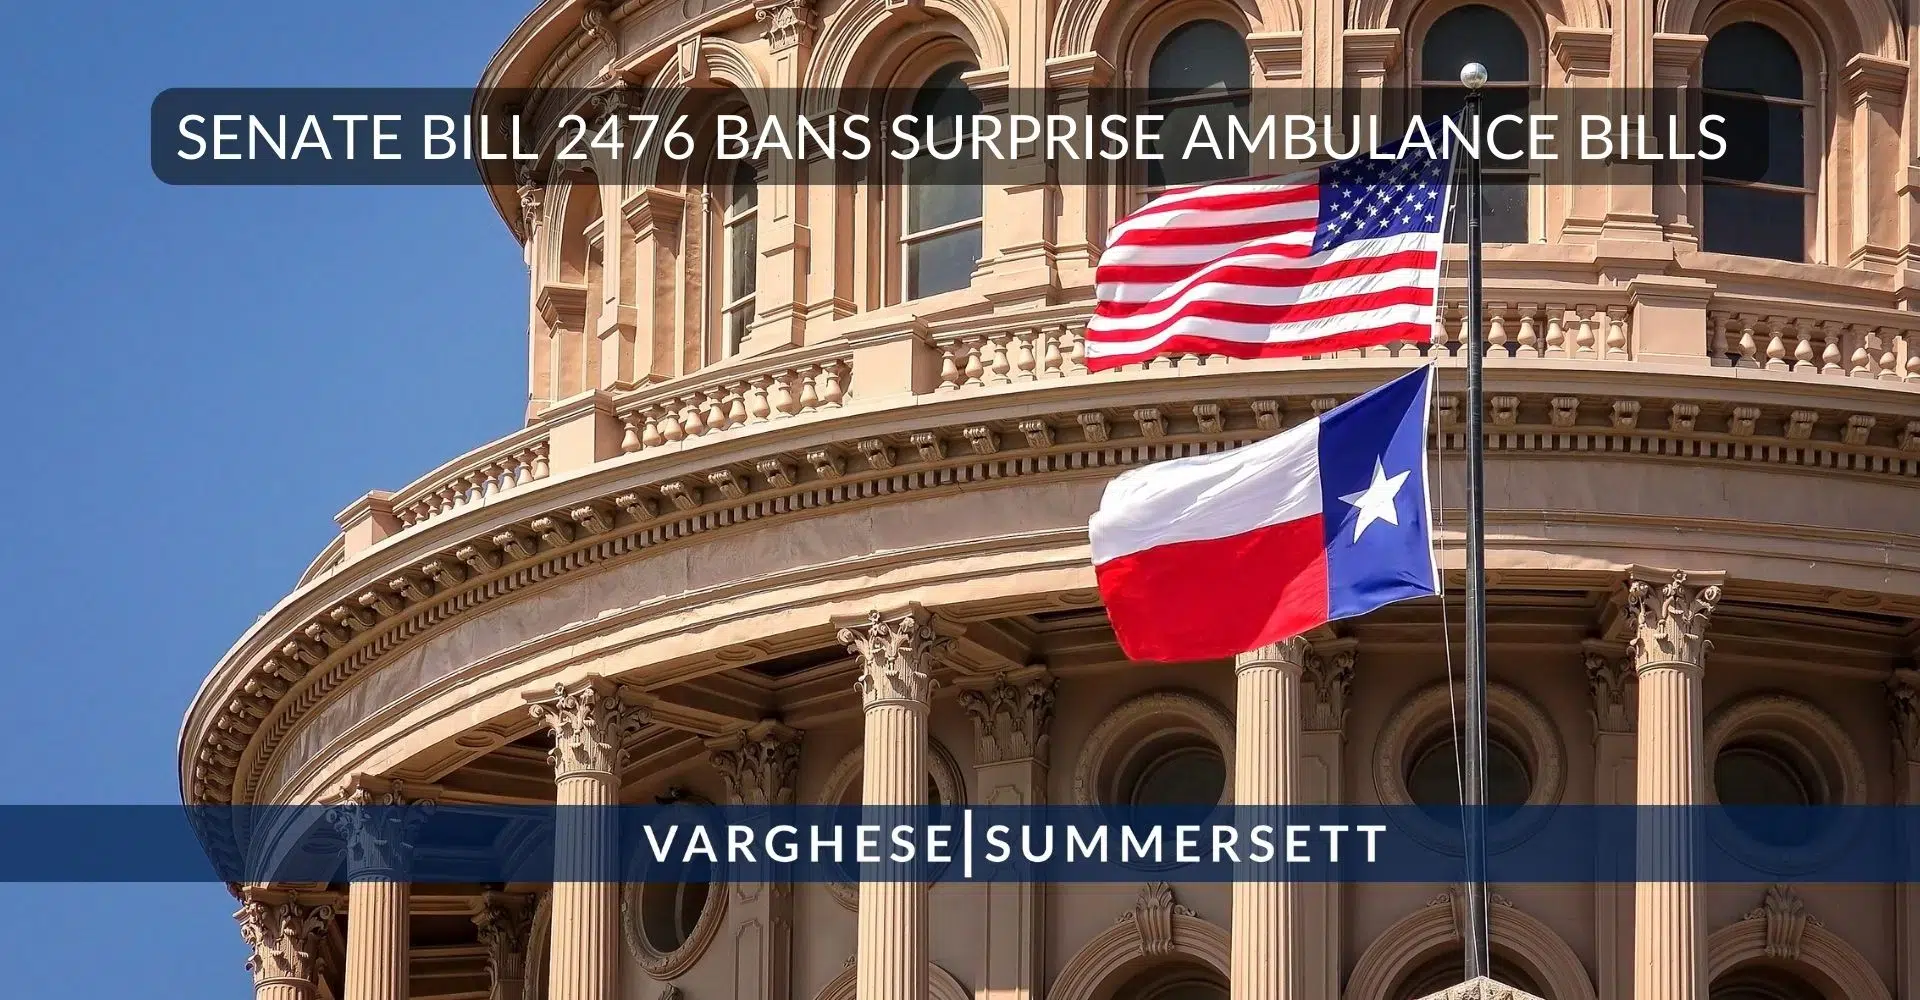 SB 2476 Bans Surprise Ambulance Bills